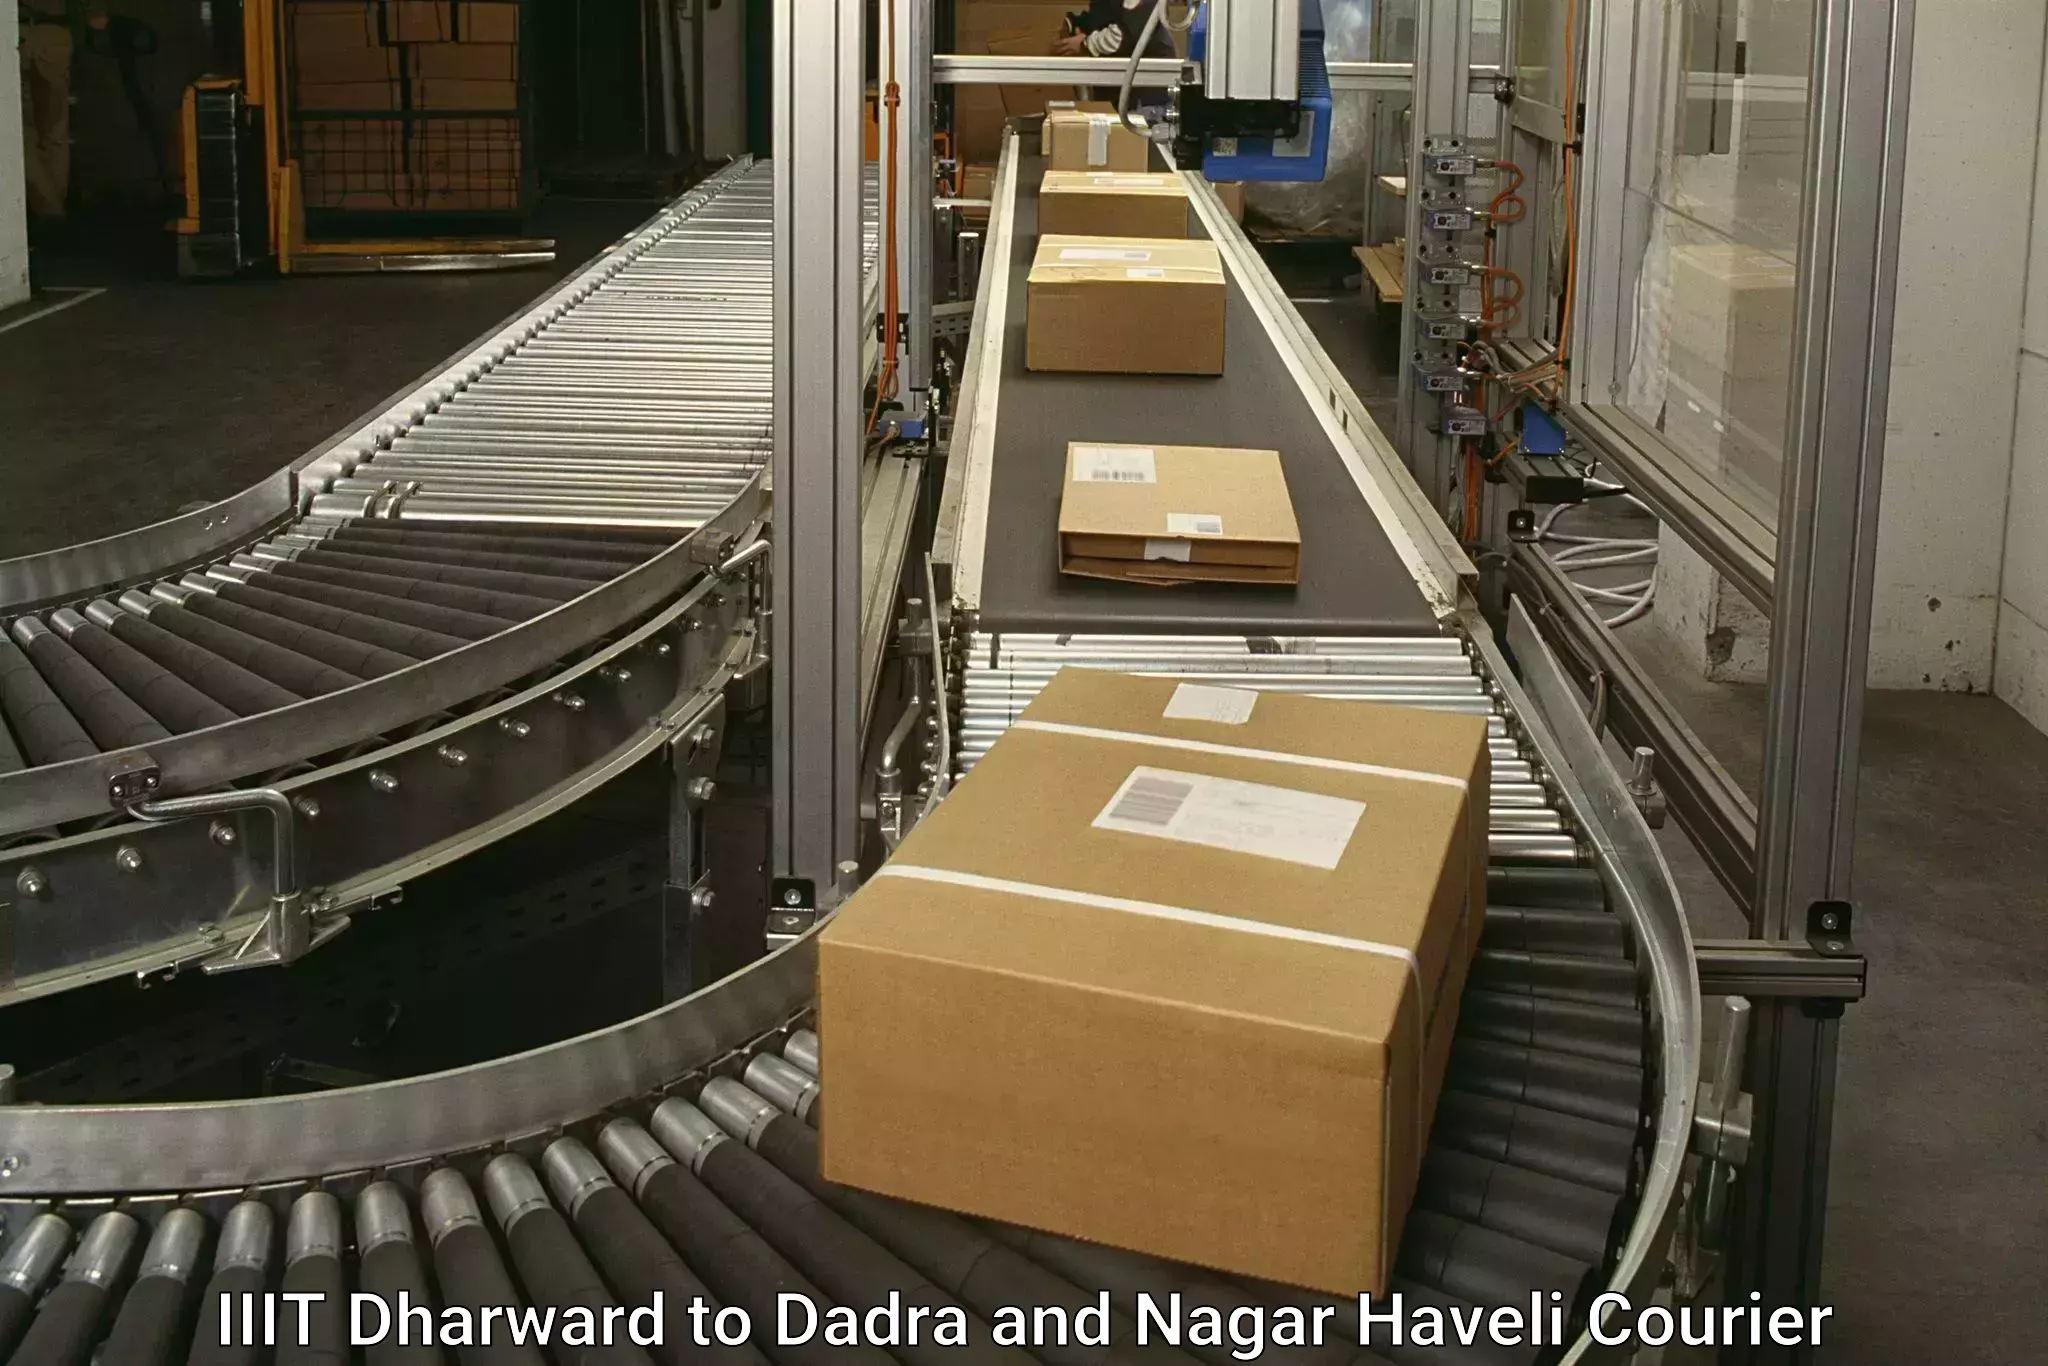 Pharmaceutical courier IIIT Dharward to Dadra and Nagar Haveli